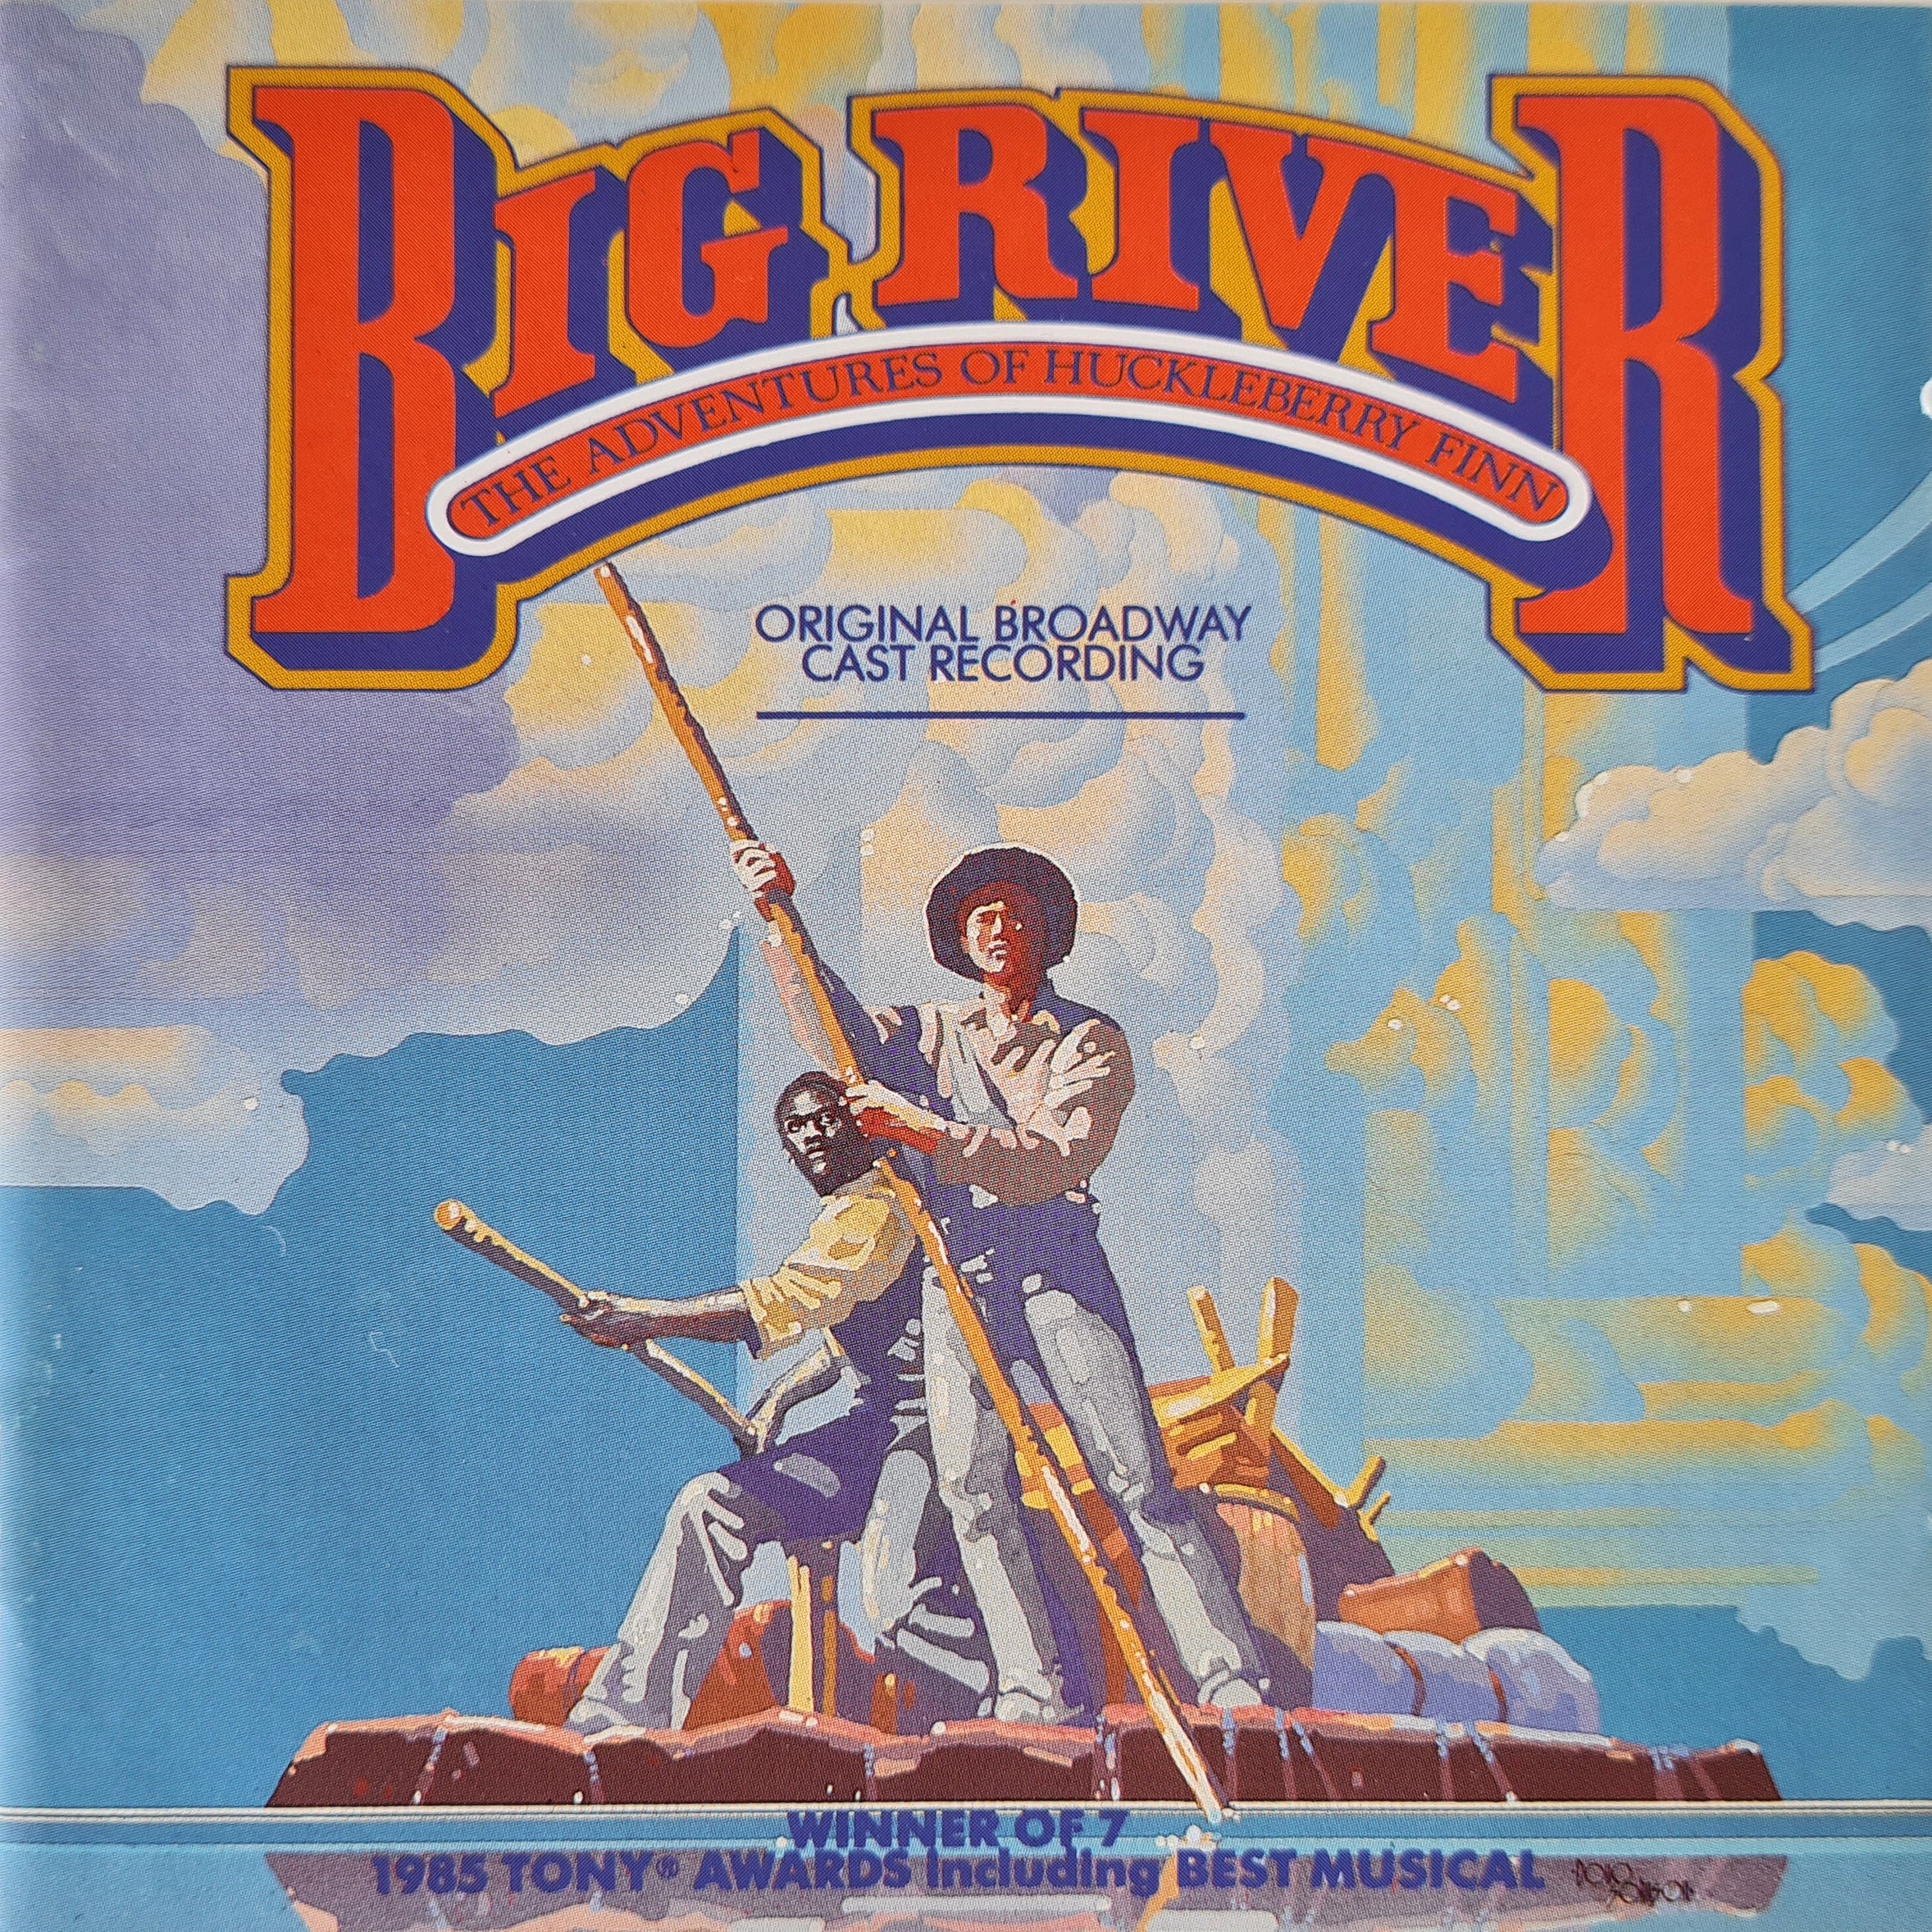 Big River - The Adventures of Huckleberry Finn - Cast Recording (CD)